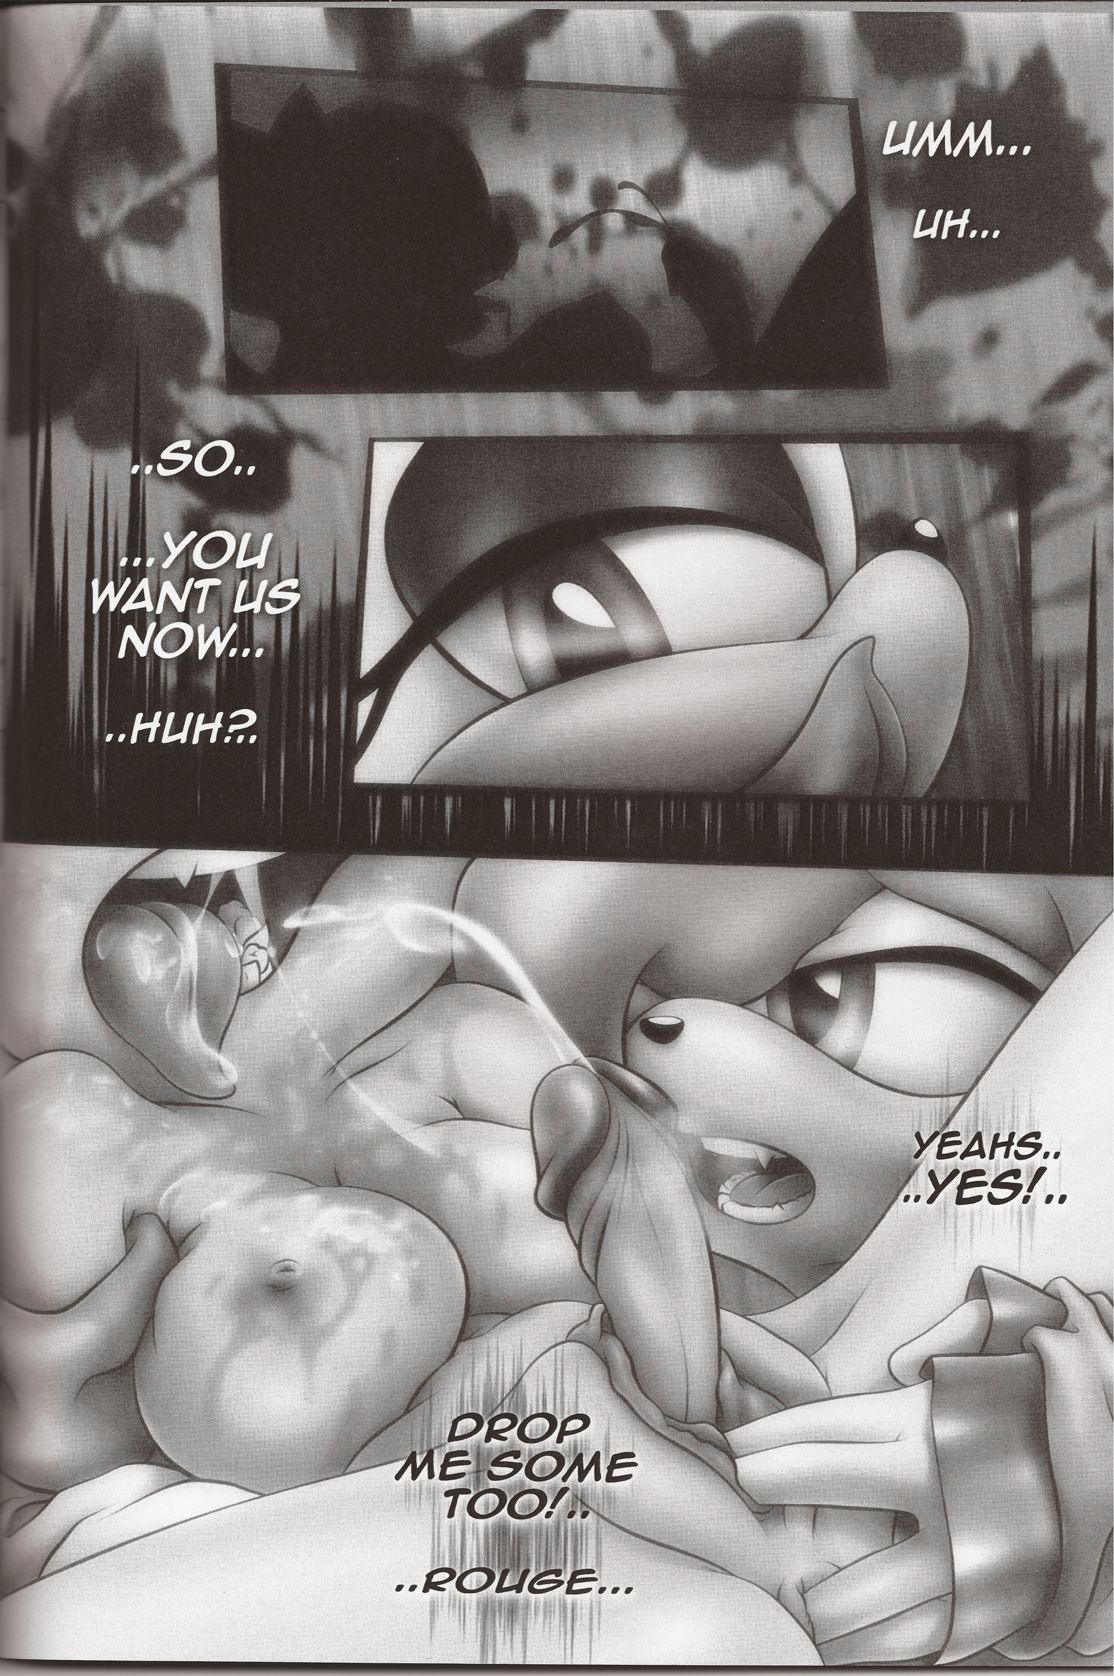 Amy Untold Fantasies - Volume #1 (Sonic the Hedgehog) 